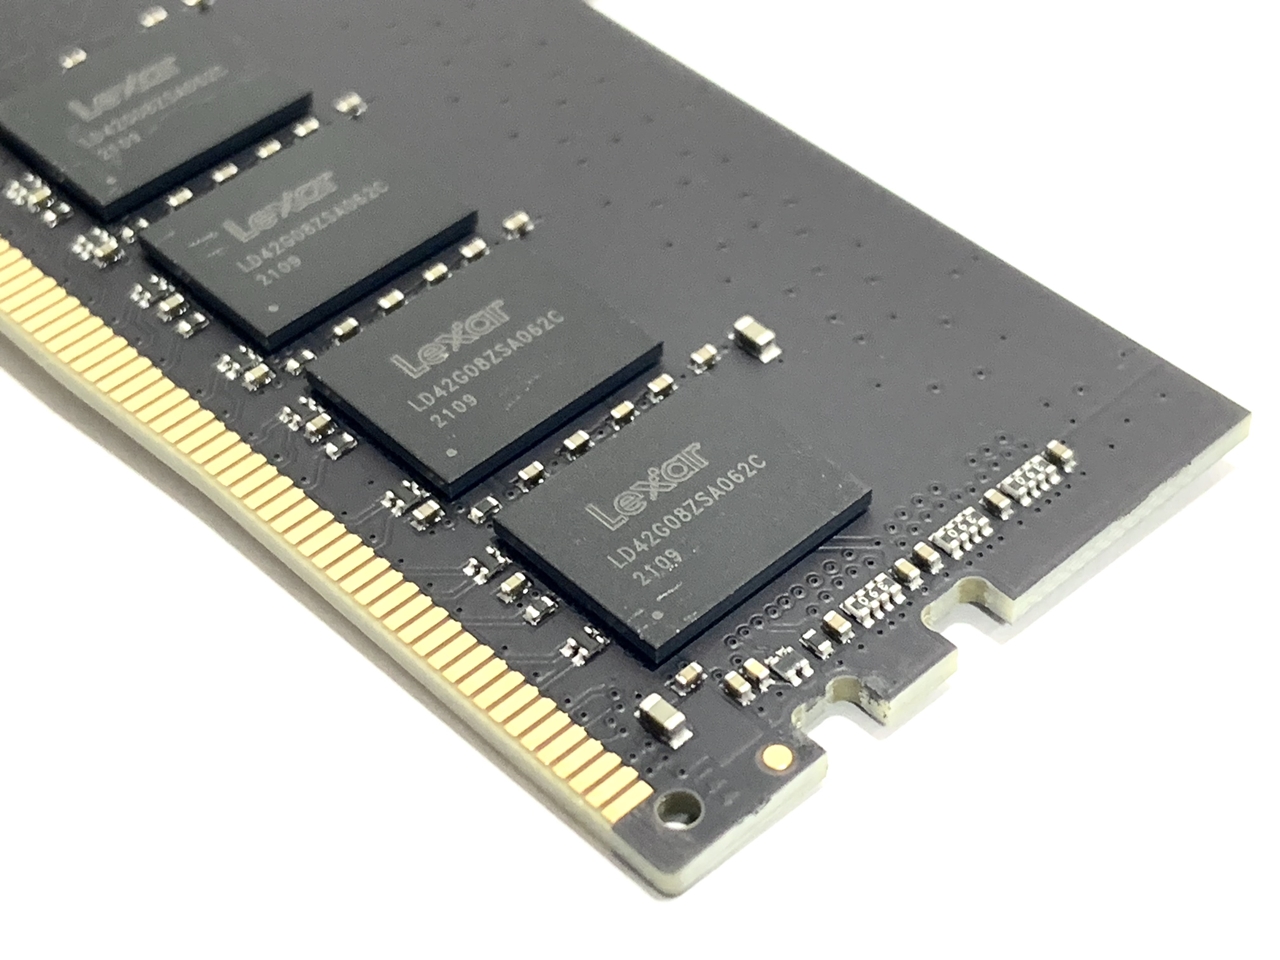 Lexar DDR4-3200 SODIMM 32GB Laptop Memory Kit Review - Funky Kit